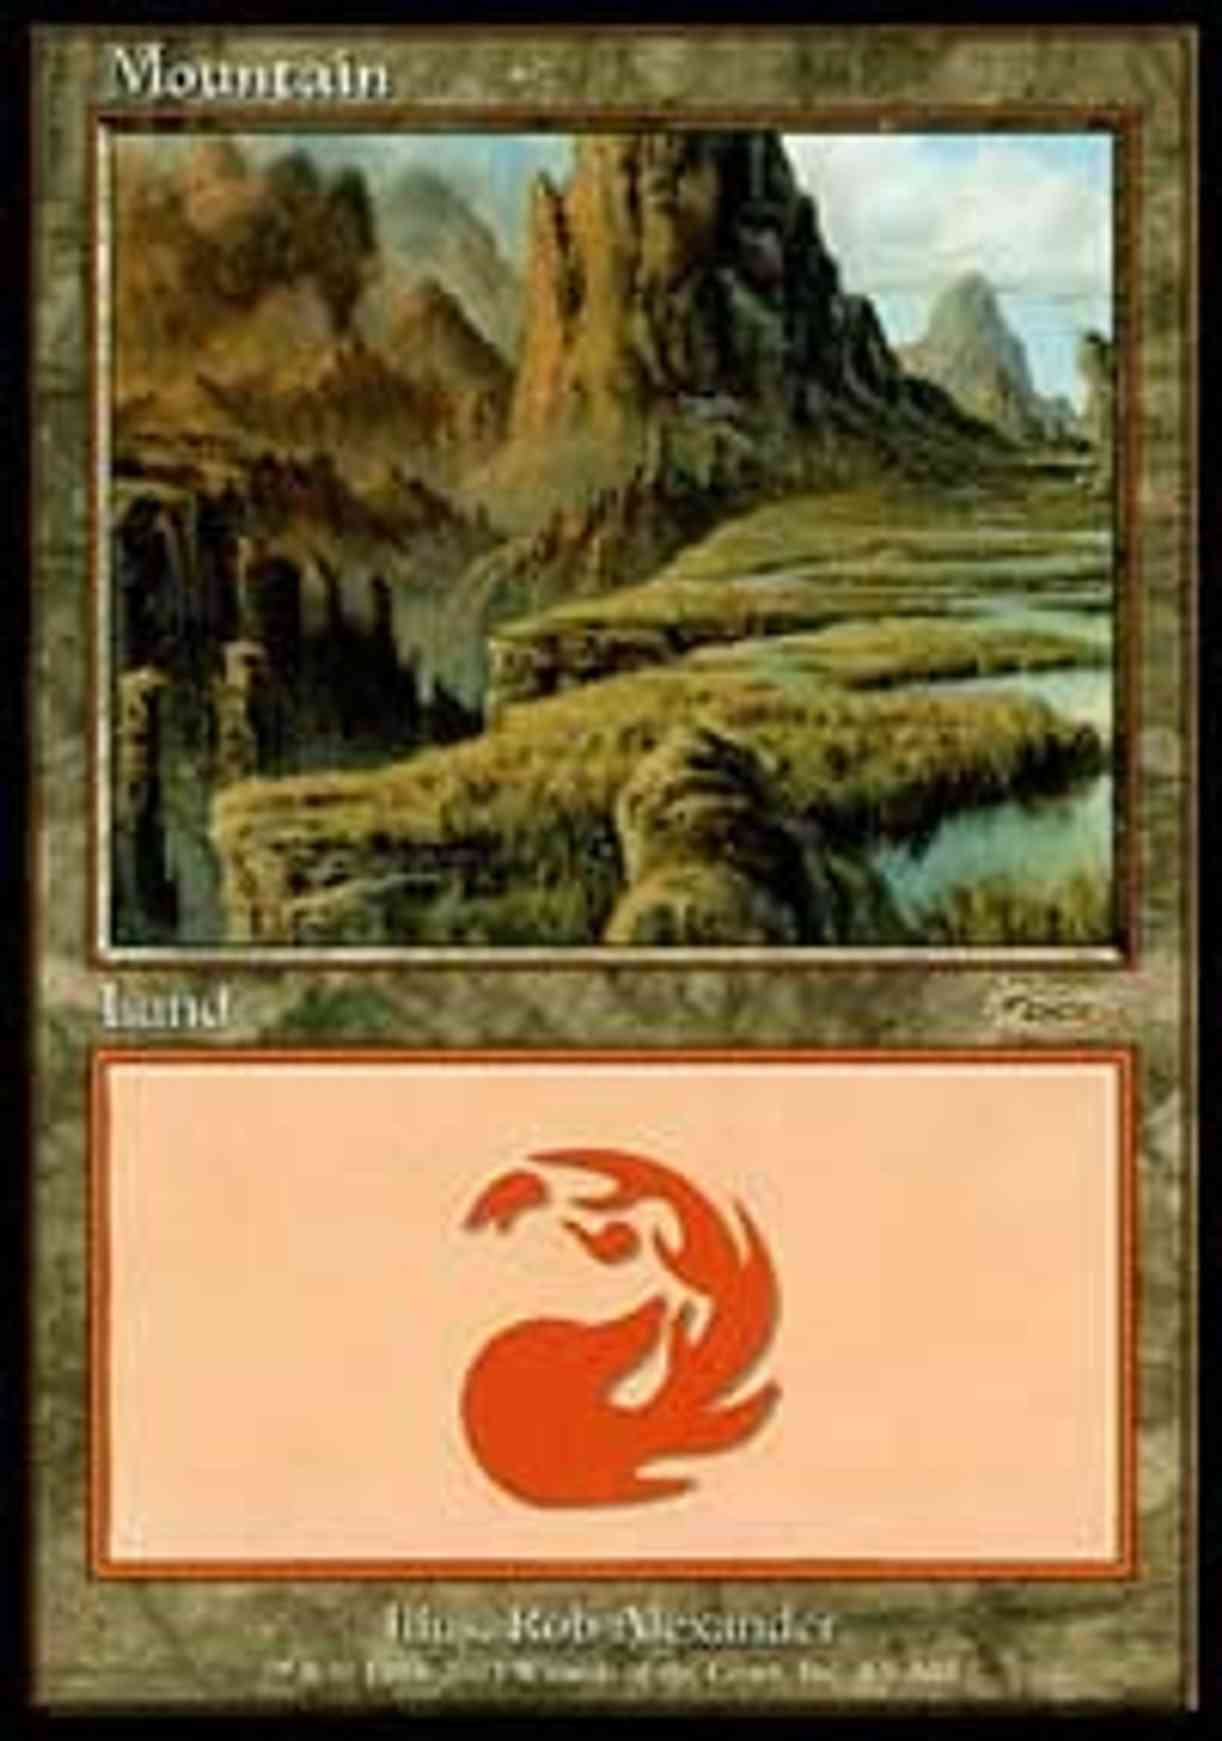 Mountain (2003) magic card front